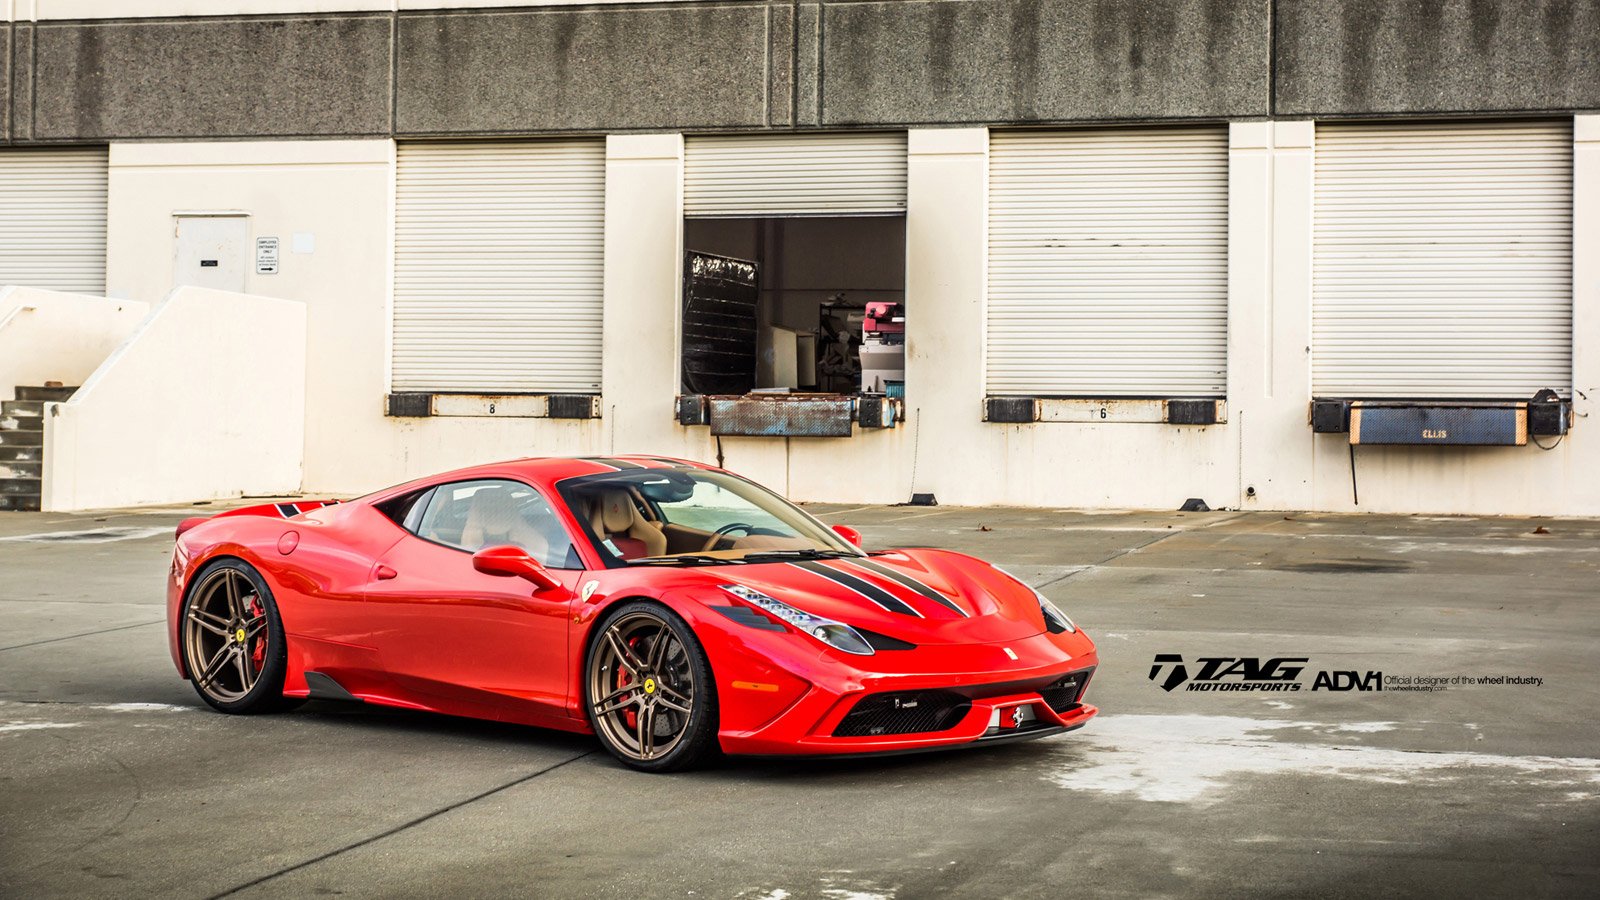 2014, Adv1, Ferrari, 458, Speciale, Supercars, Wheels Wallpaper